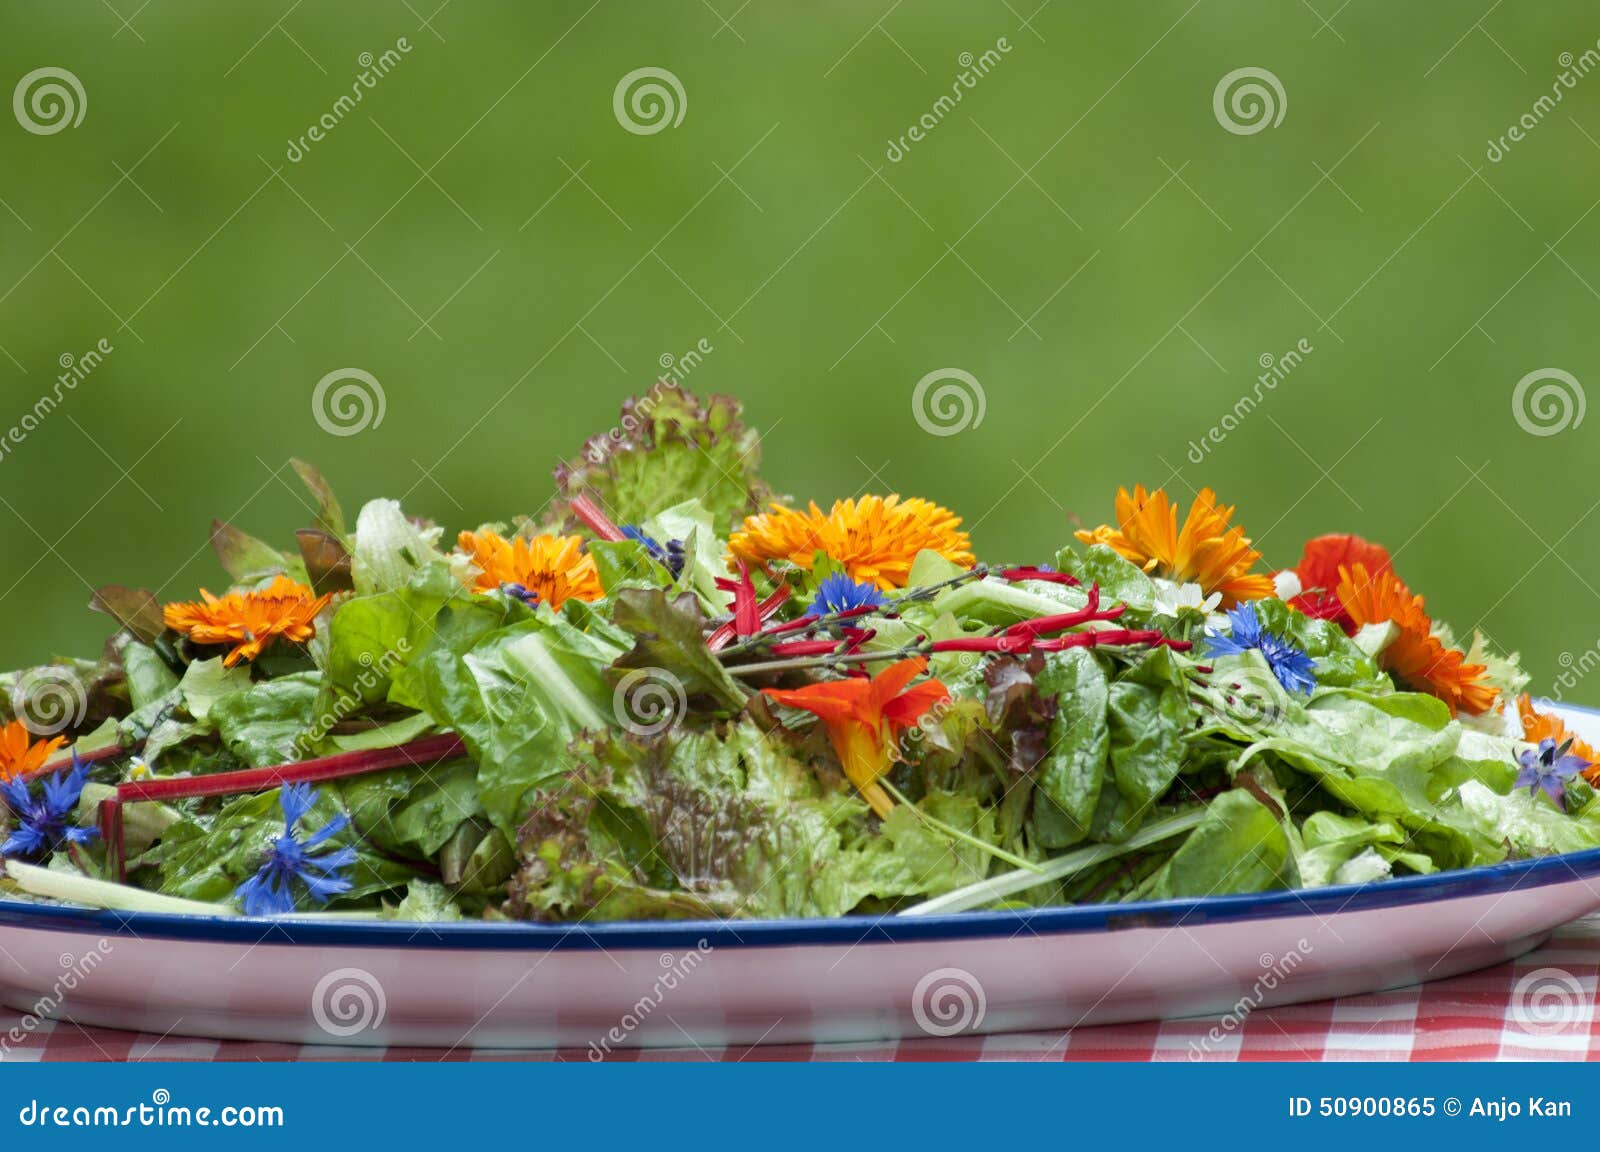 garden salad with eatable flowers